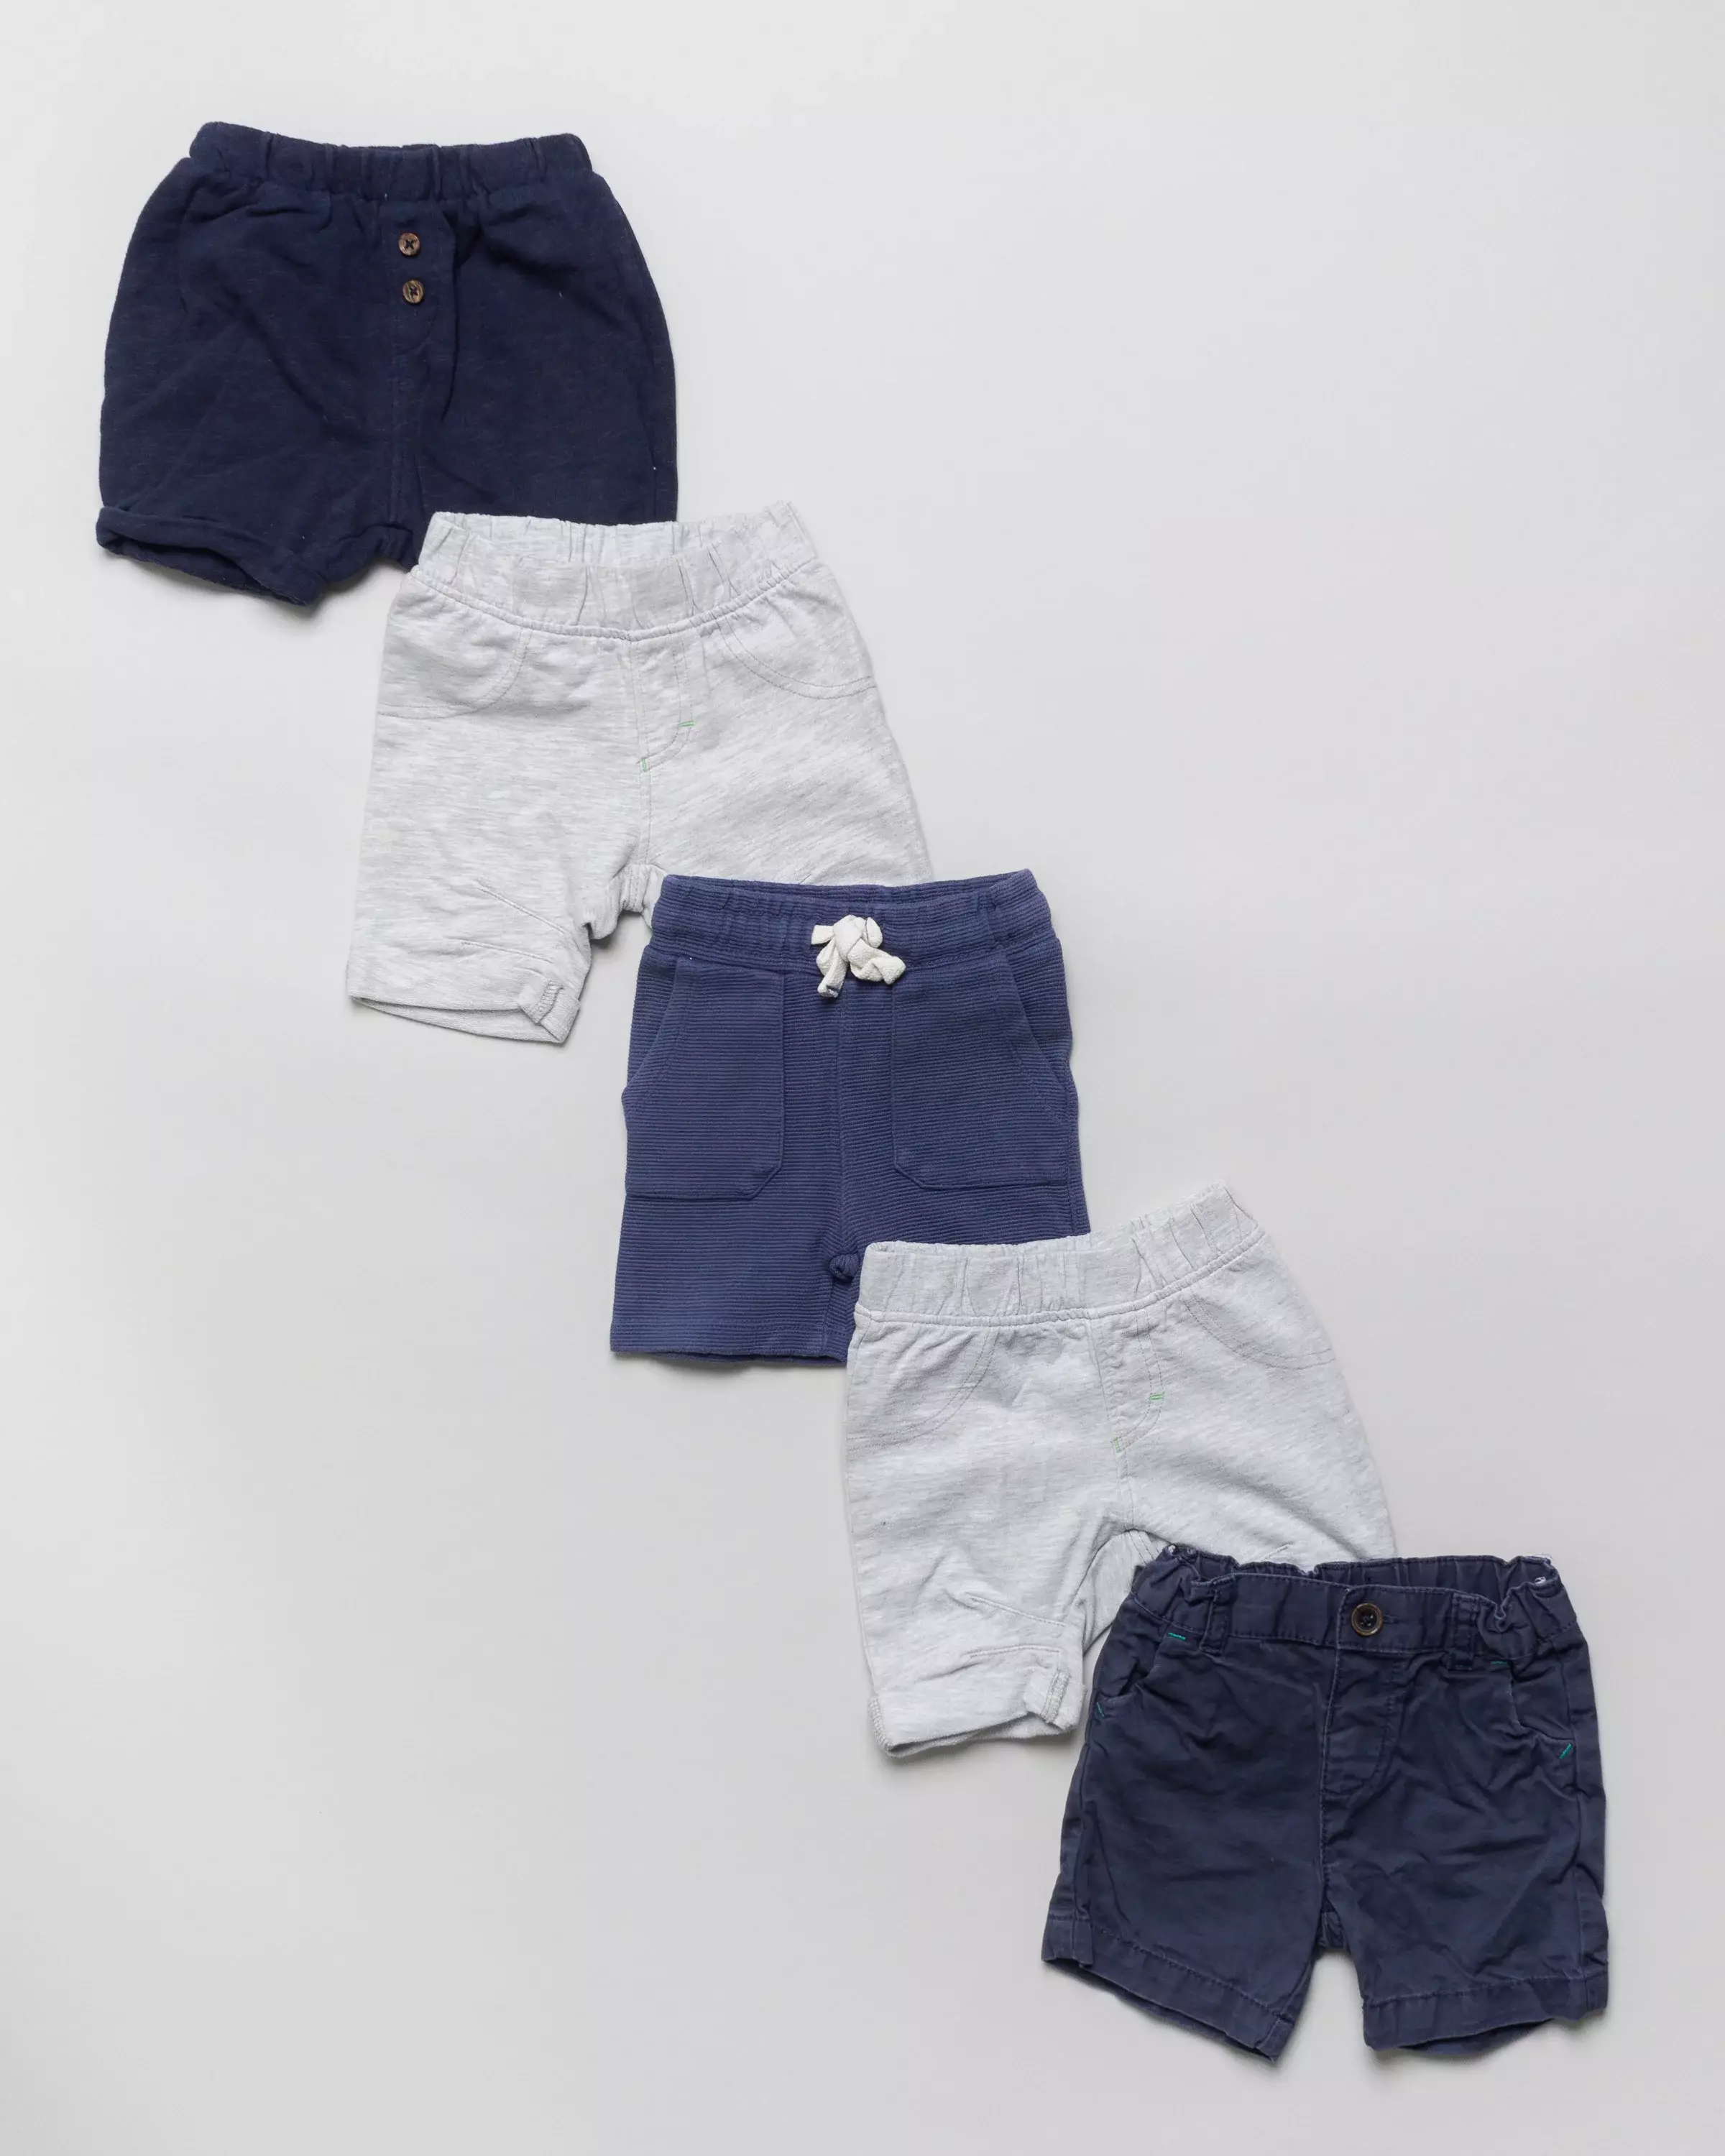 5 kurze Hosen Gr. 68 – Shorts, blau, grau, Set, Pack